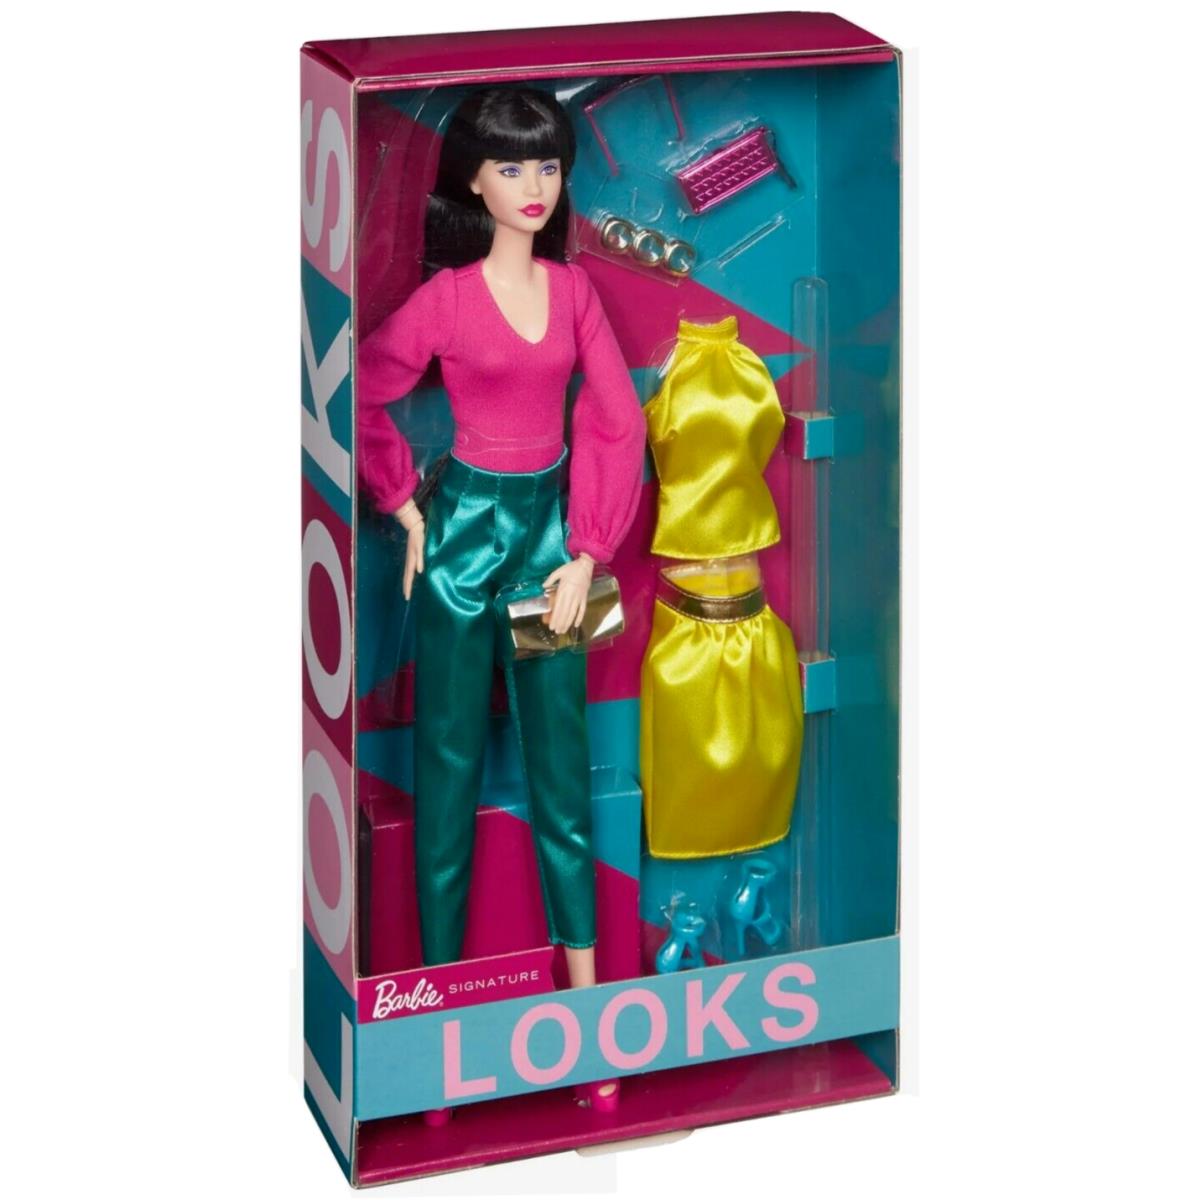 Barbie Signature Barbie Looks Posable Tall Doll 19 Mix Match Fashions HJX28